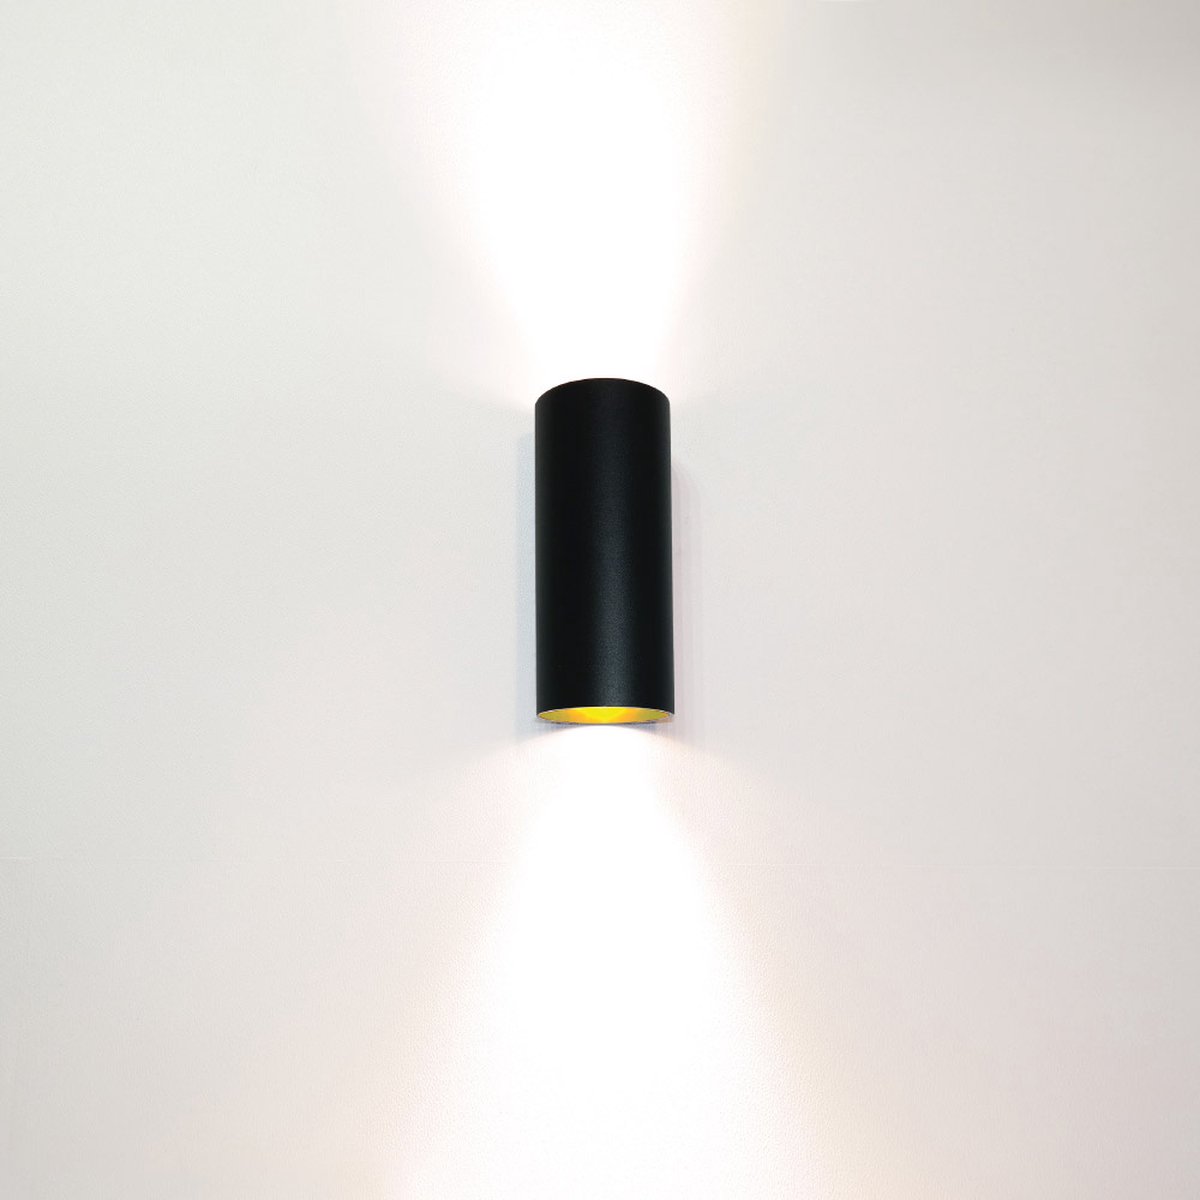 Wandlamp Roulo 2 Zwart/Goud - Ø6,5xH15,4cm - 2x GU10 LED 4,8W 2700K 355lm - IP20 - Dimbaar > wandlamp zwart goud | wandlamp binnen zwart goud | wandlamp hal zwart goud | wandlamp woonkamer zwart goud | wandlamp slaapkamer zwart goud